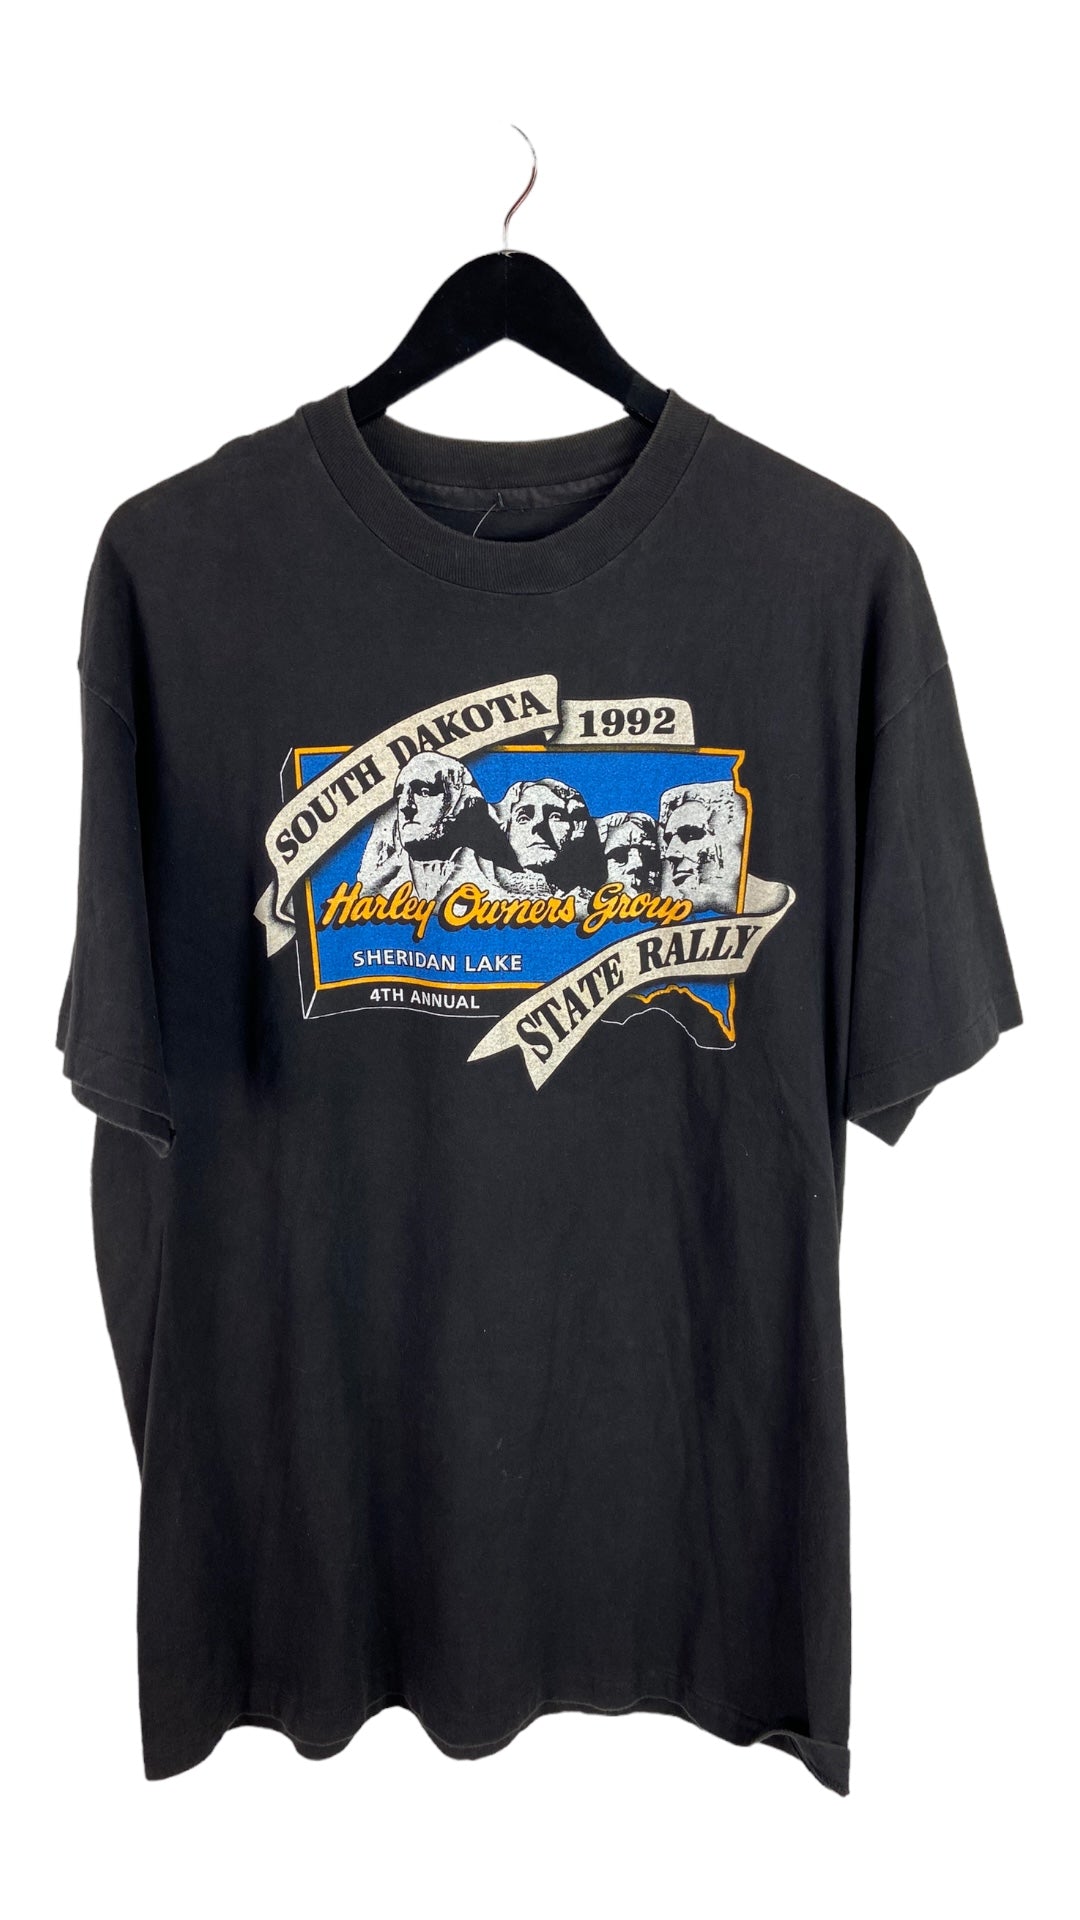 VTG '92 Harley Davidson Mount Rushmore Tee Sz L/XL